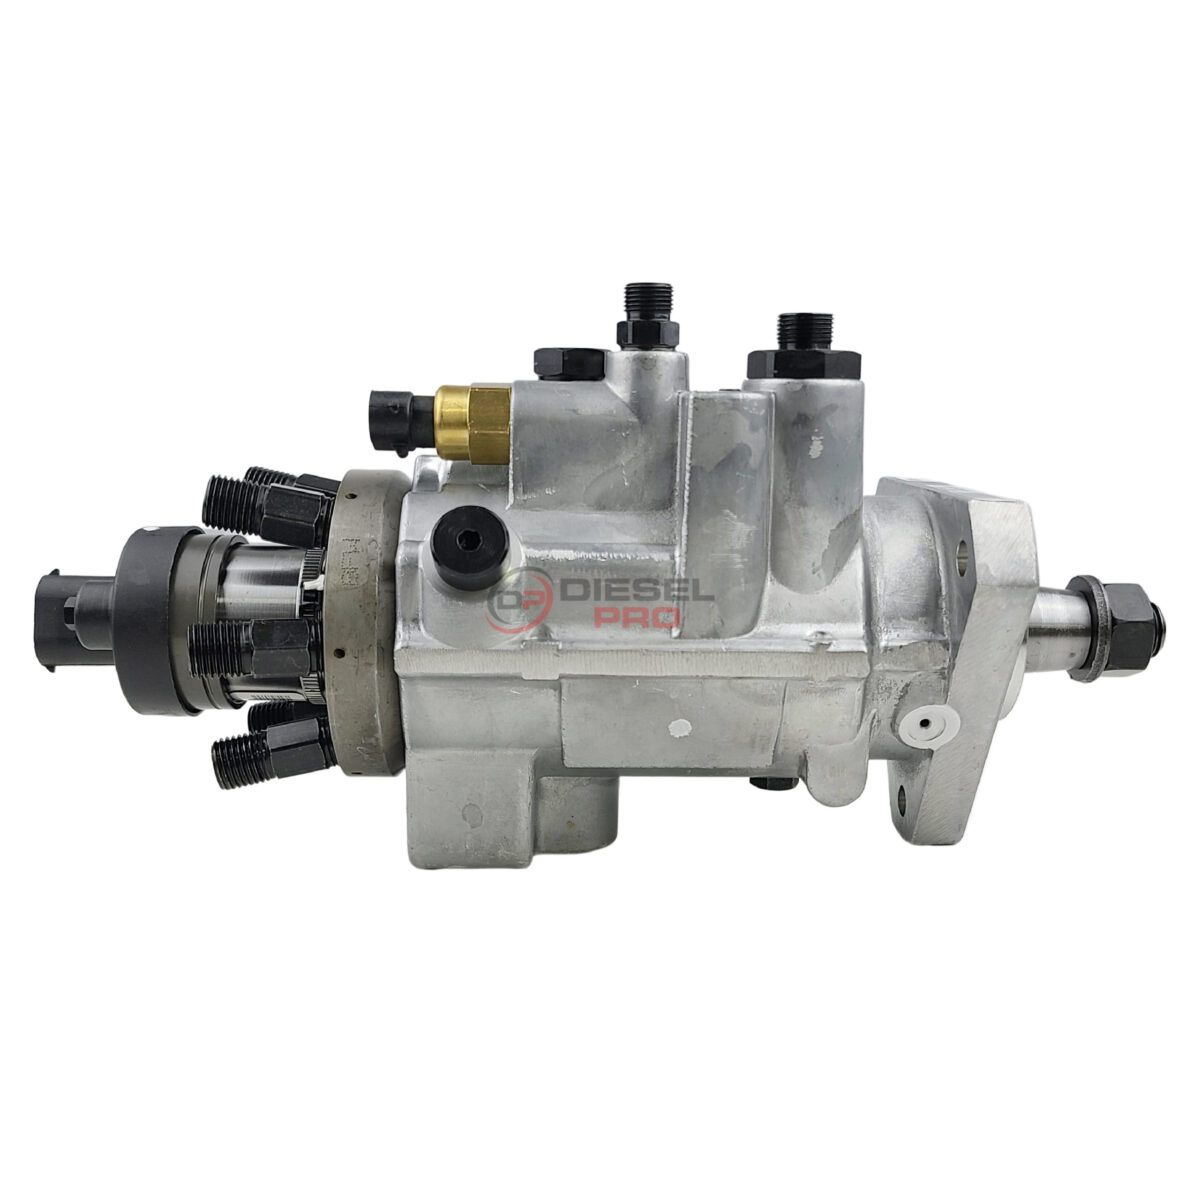 RE568067 | John Deere Stanadyne Fuel Pump (SE501237)